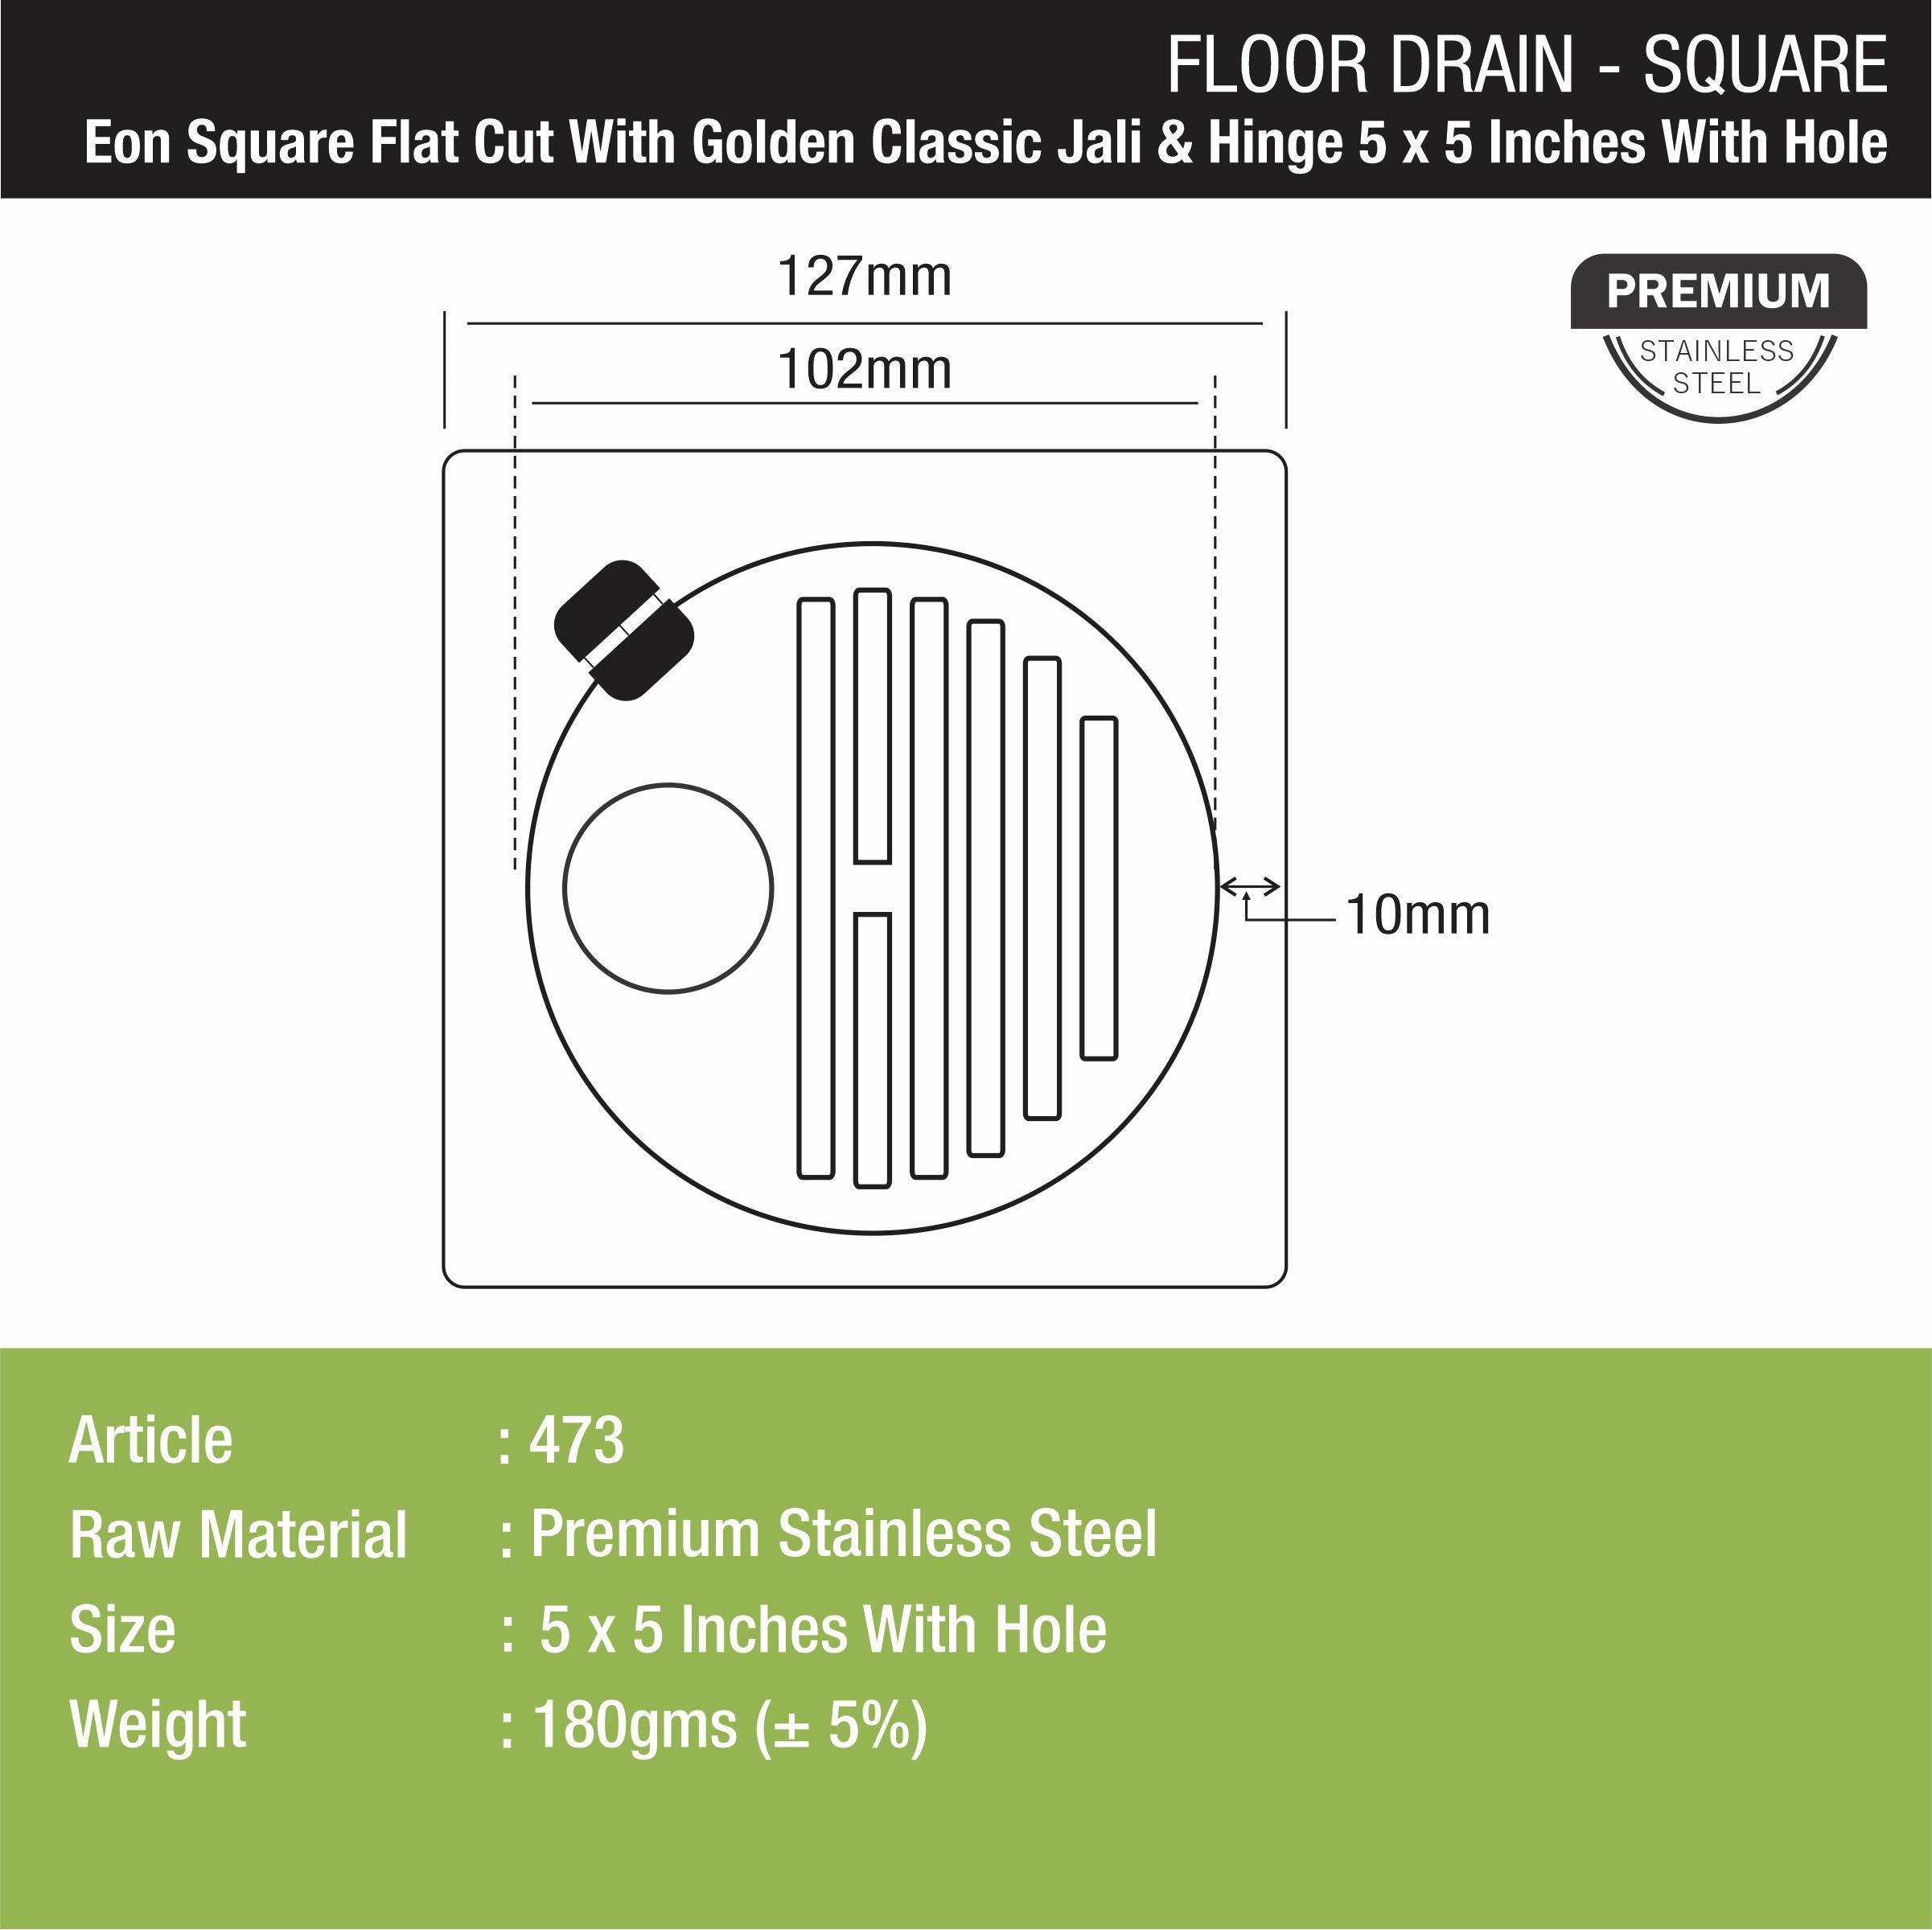 Eon Square Flat Cut Floor Drain with Golden Classic Jali, Hinge and Hole (5 x 5 Inches) - LIPKA - Lipka Home